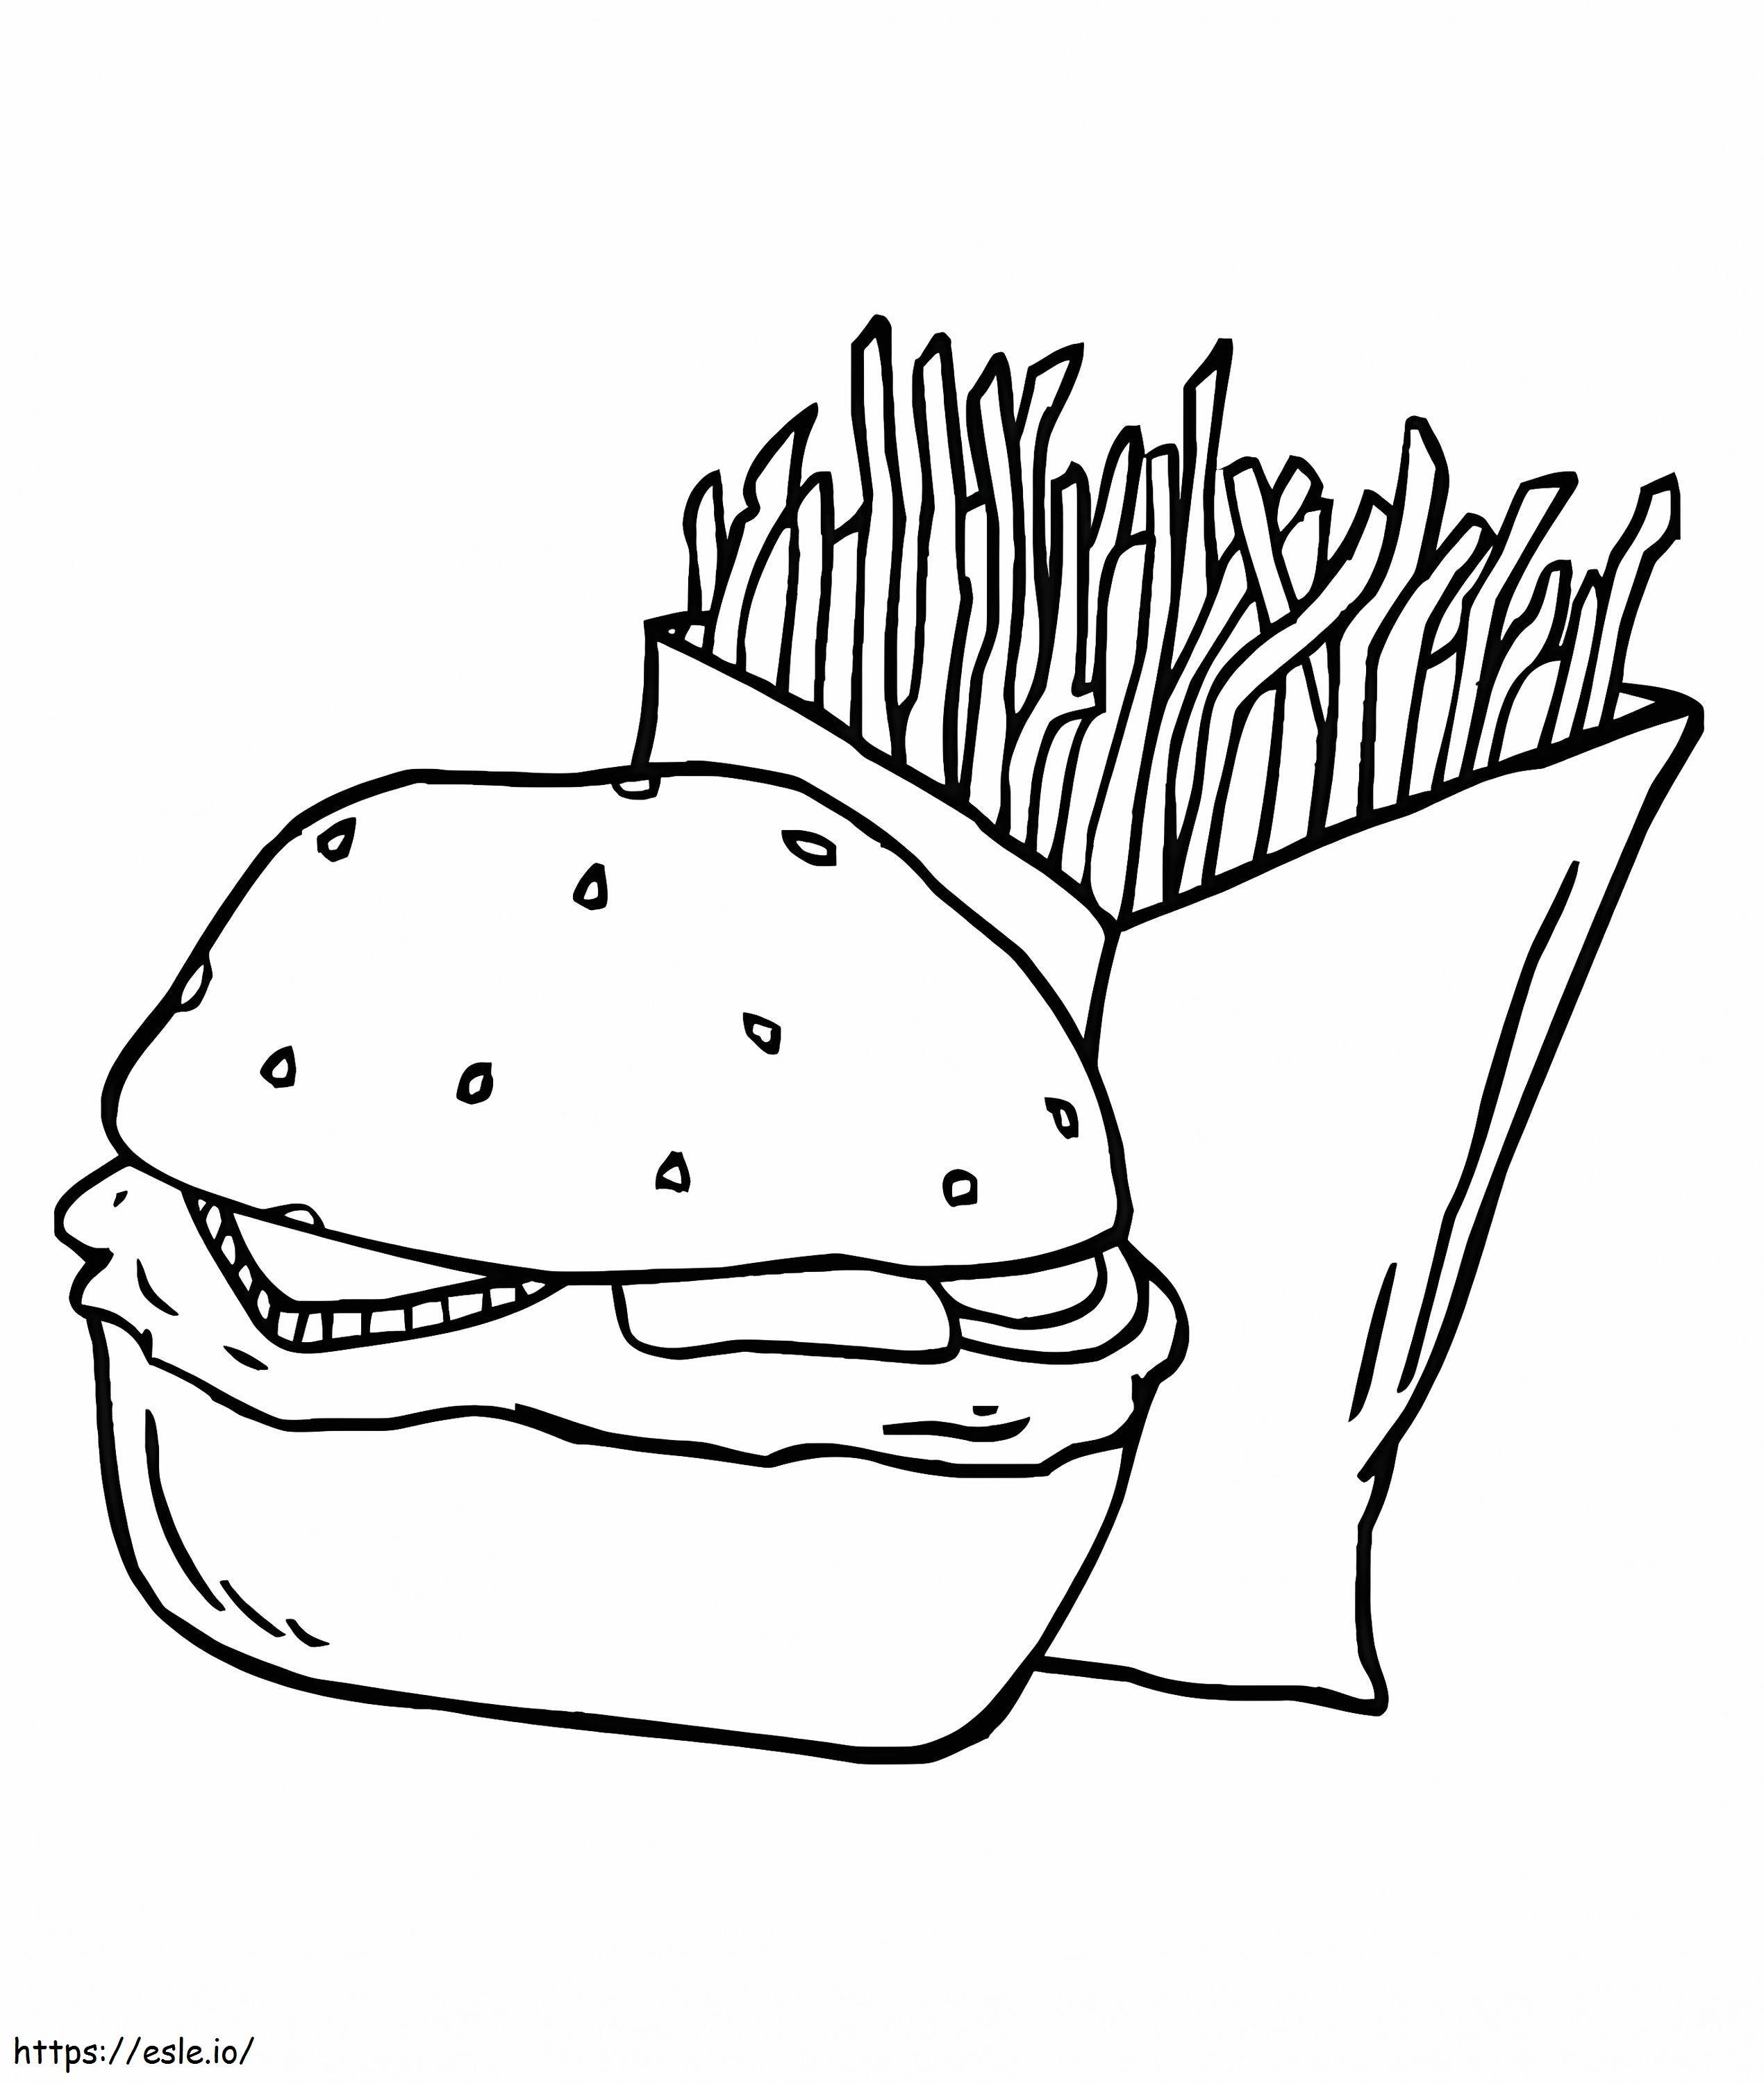 Batatas fritas e hambúrguer para colorir